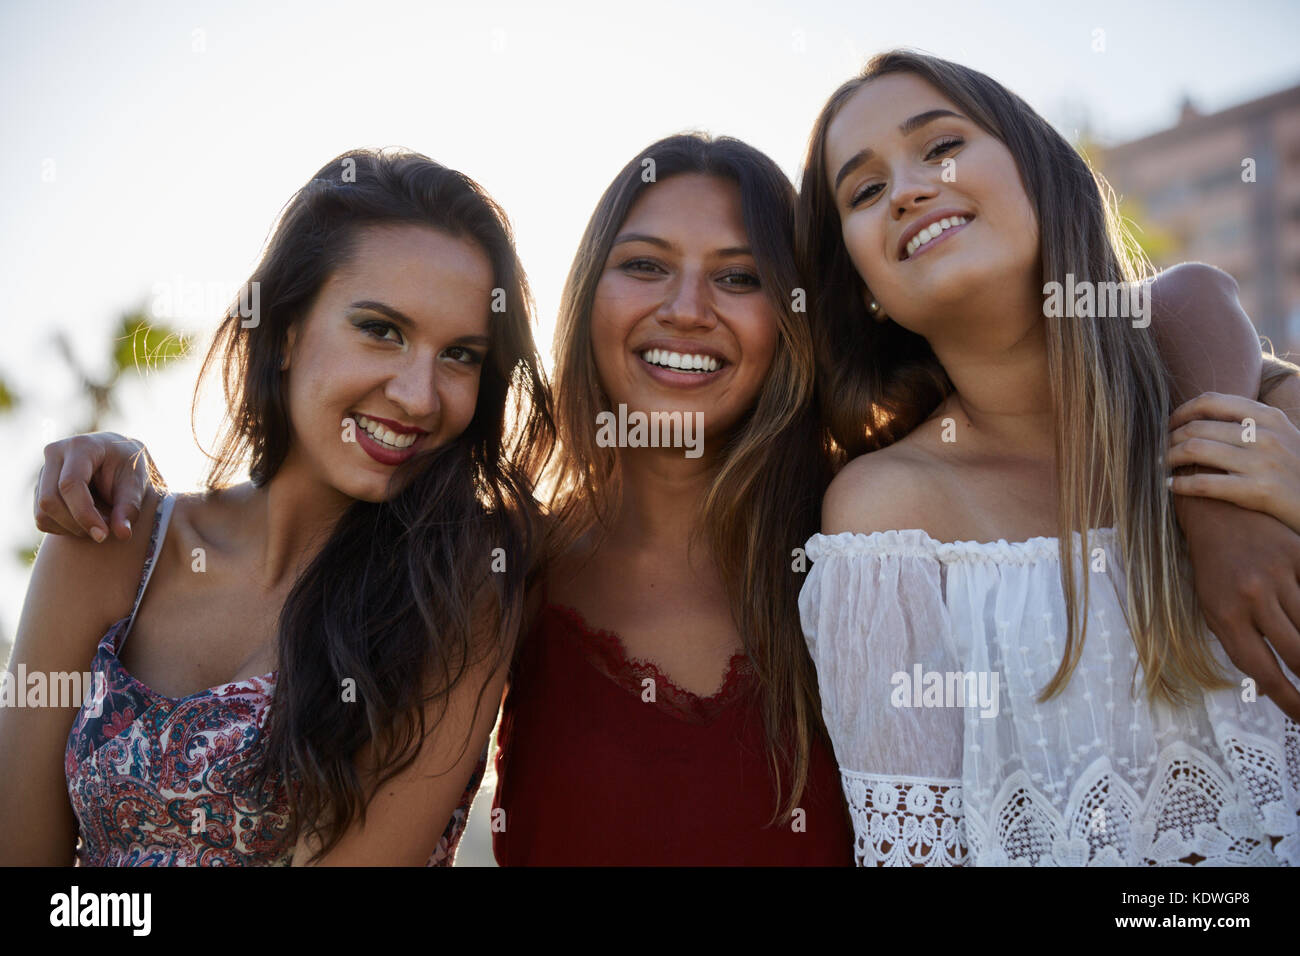 Portrait de trois belles femmes Standing together smiling Banque D'Images